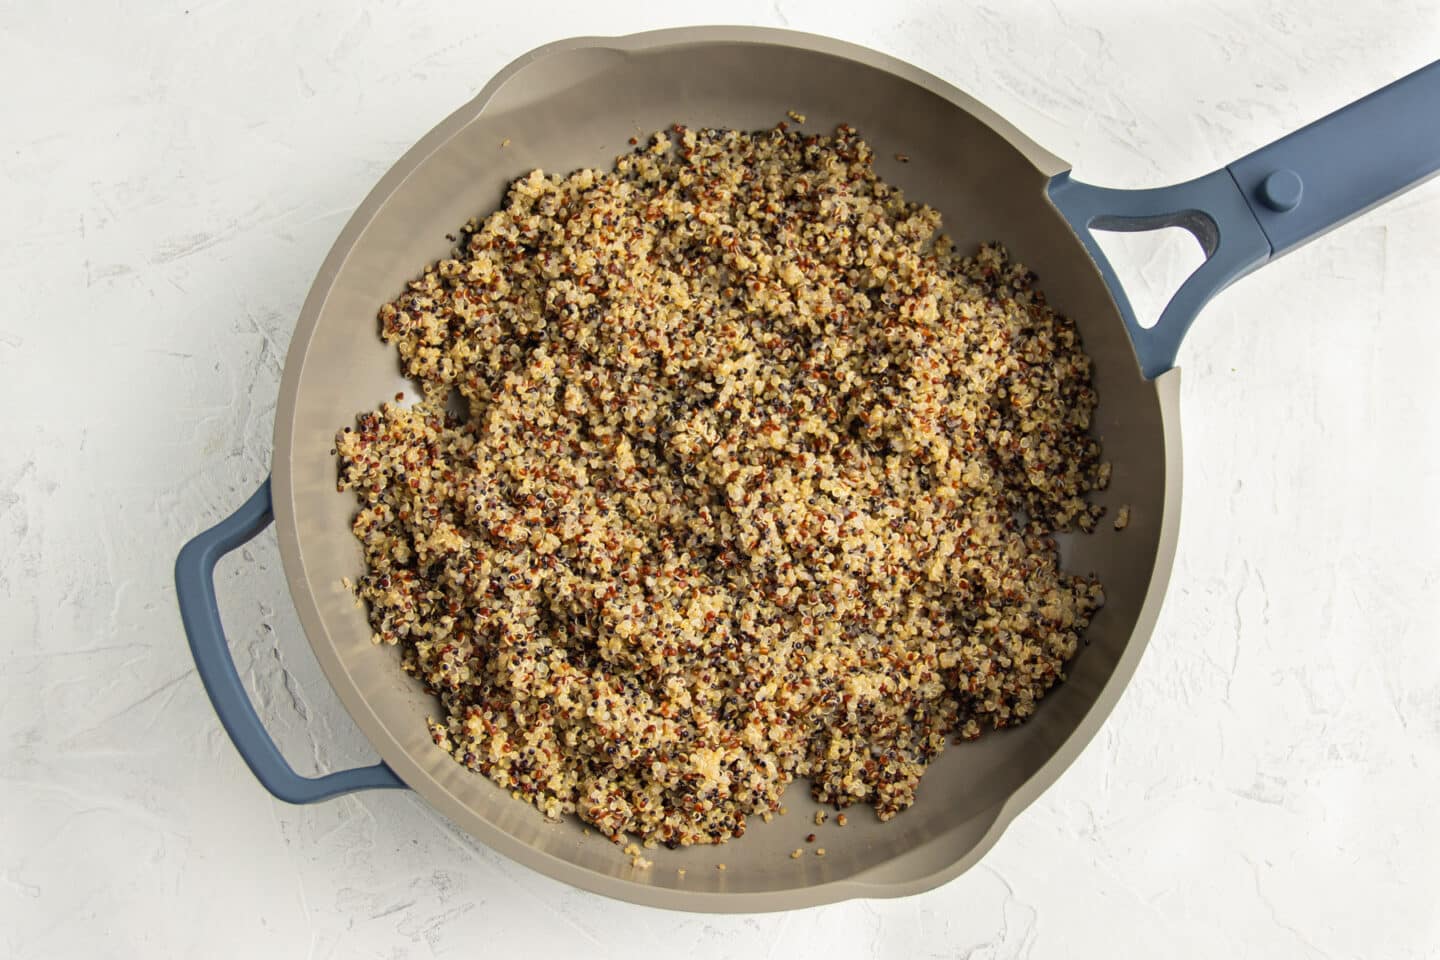 Cooked quinoa in skillet.